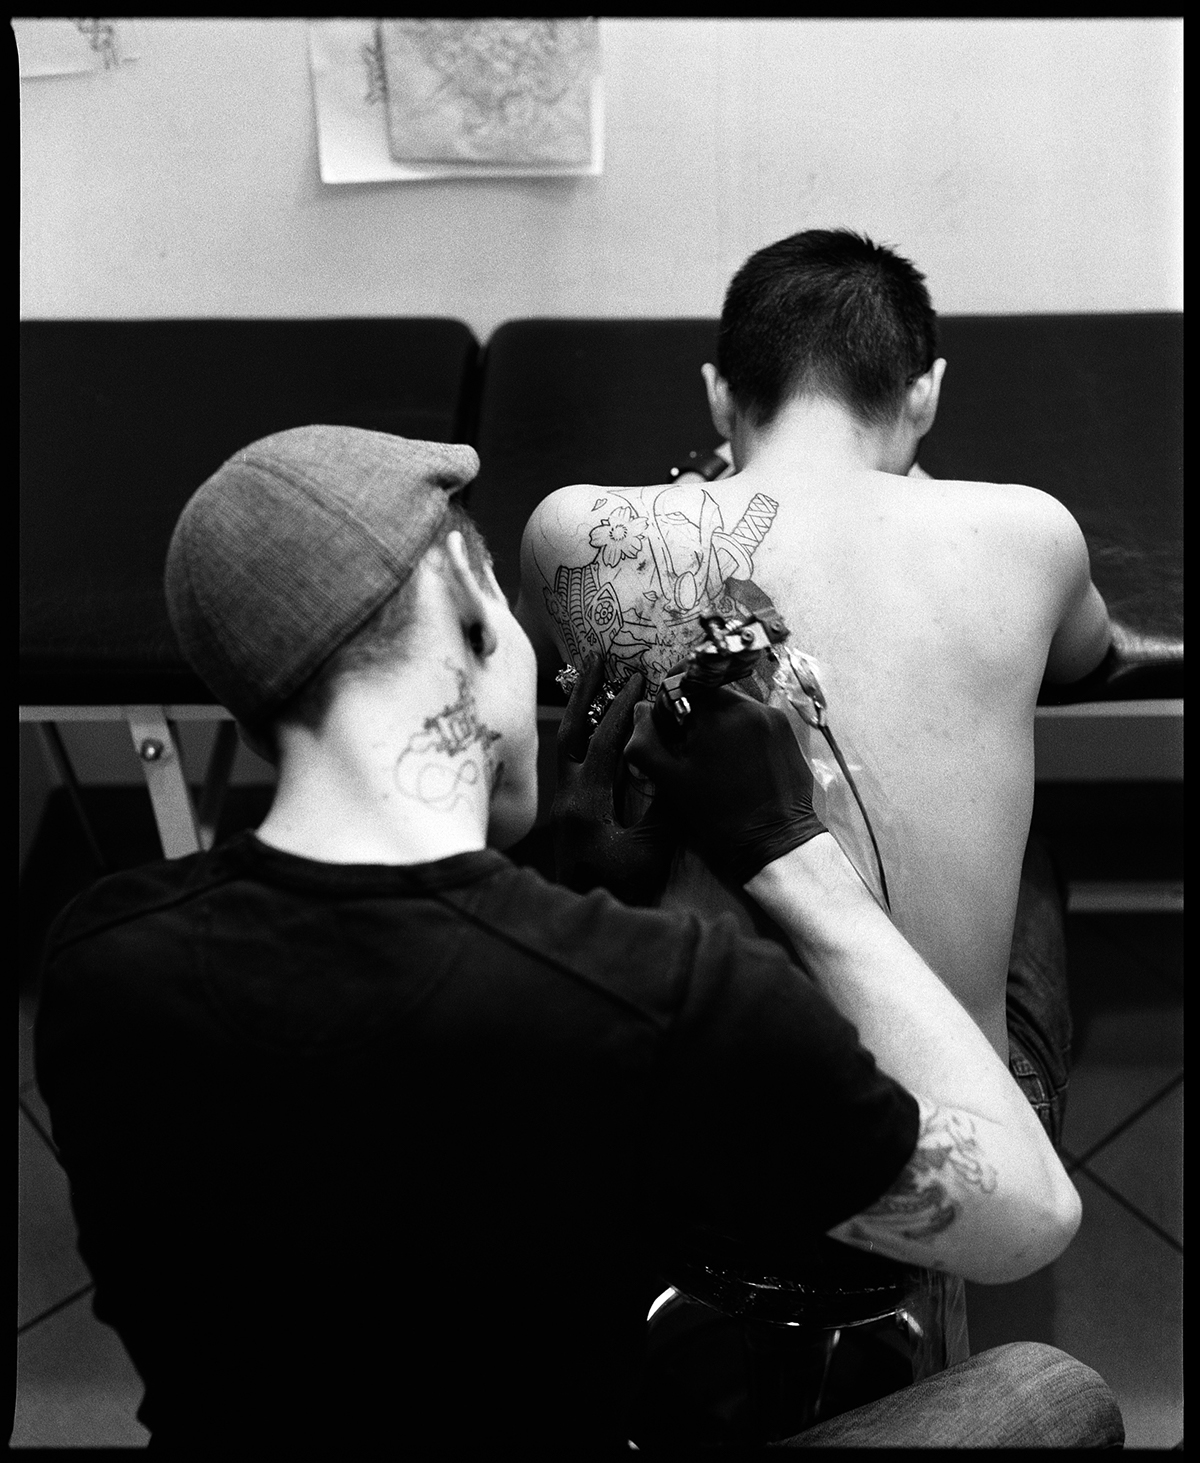 julien ratel blueju tattoo photo urban culture body art ink Encre samurai samourai tatouage mask Helmet kabuto kuwagata Bushi kendo inked Tattooed medium format 6x7 120 mm Mamiya RB67 pro-S Ilford HP5 japan Body Modification tattoo session velvet studio grenoble